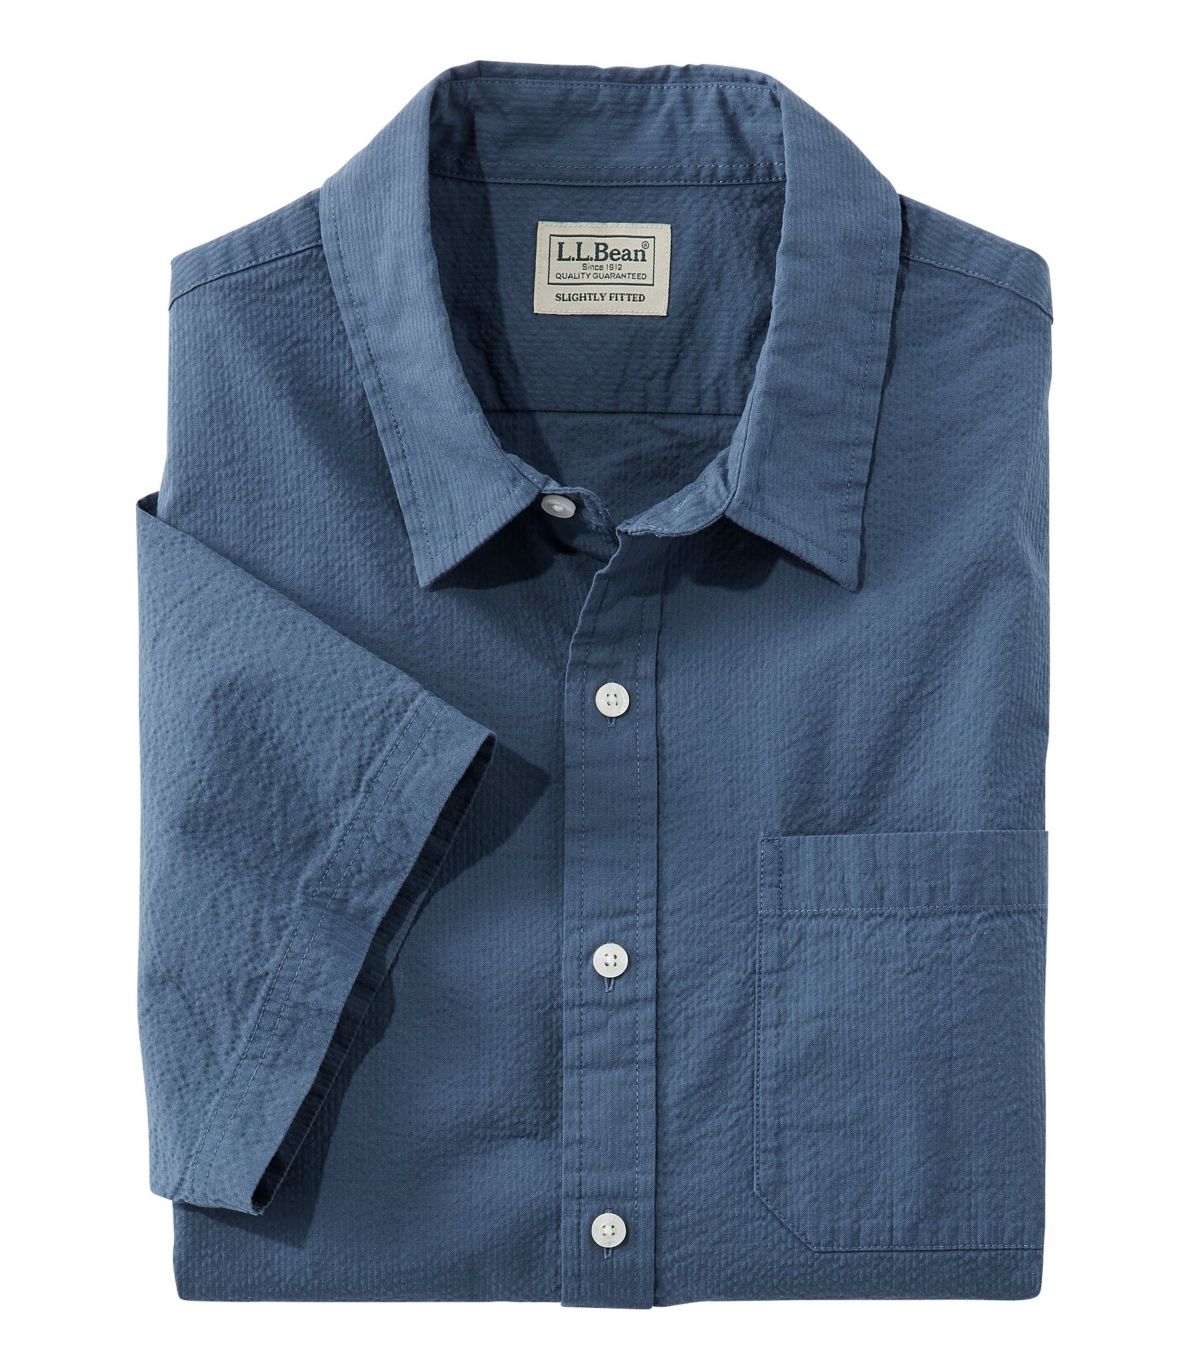 Men's Organic Seersucker Shirt, Short-Sleeve, Slightly Fitted